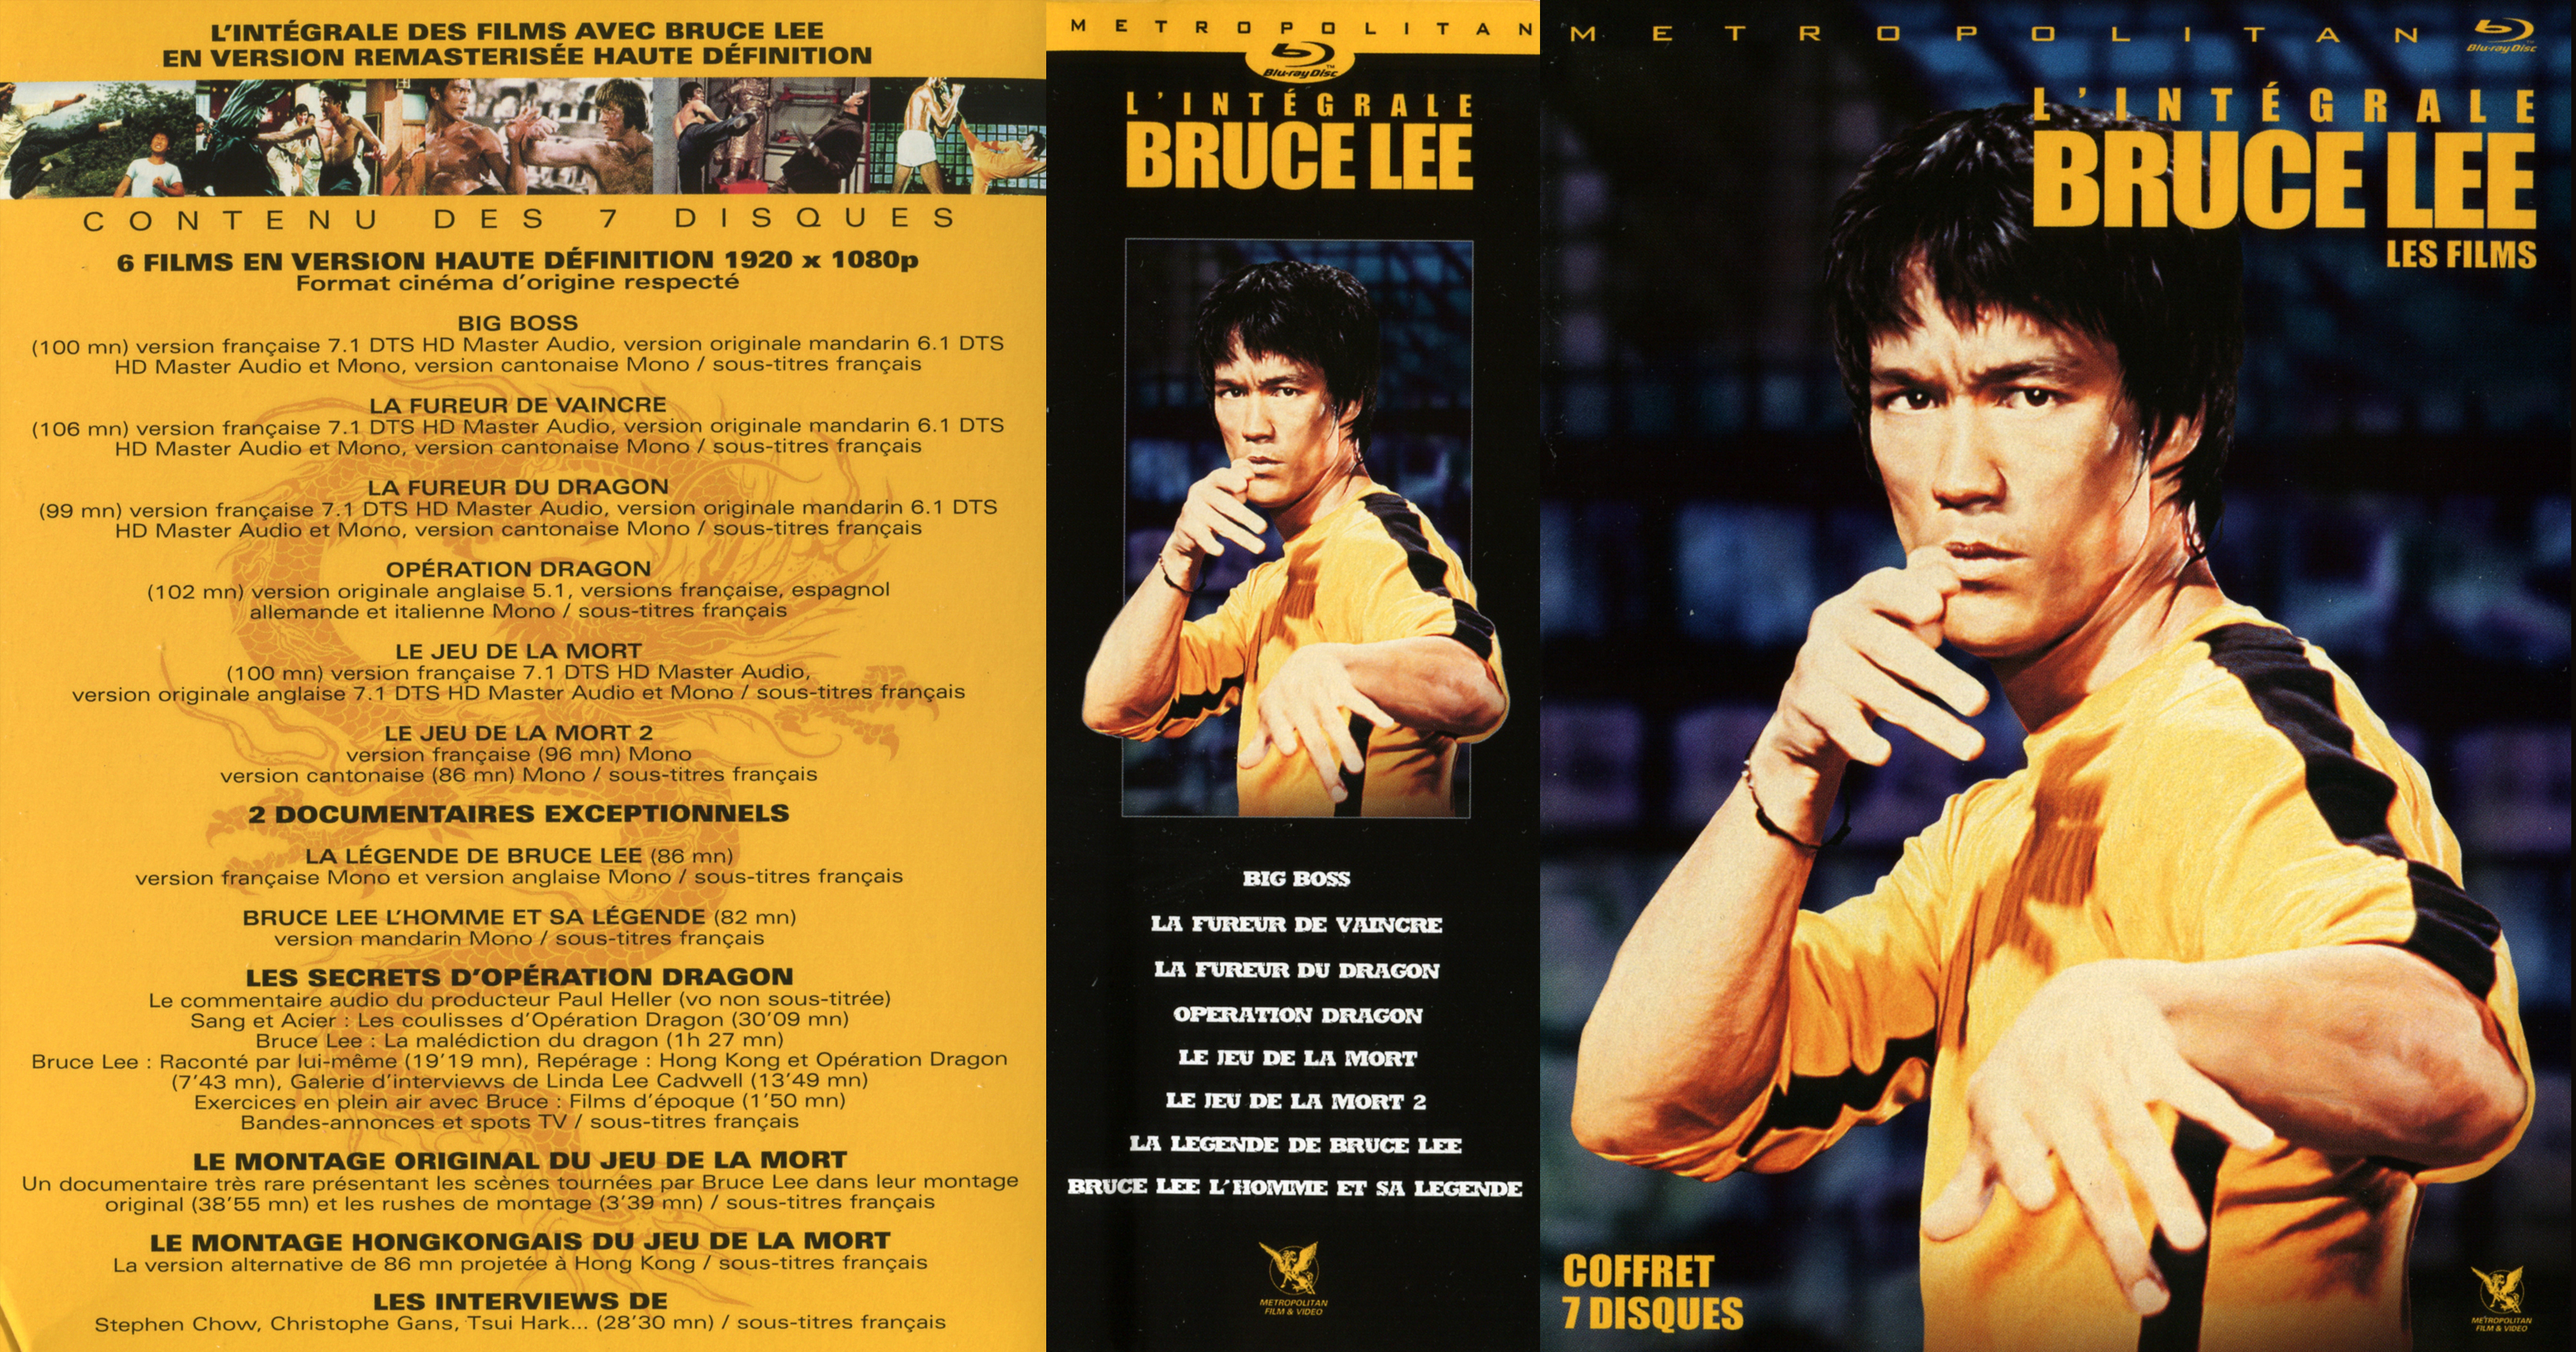 Jaquette DVD Bruce Lee COFFRET (BLU-RAY) v3